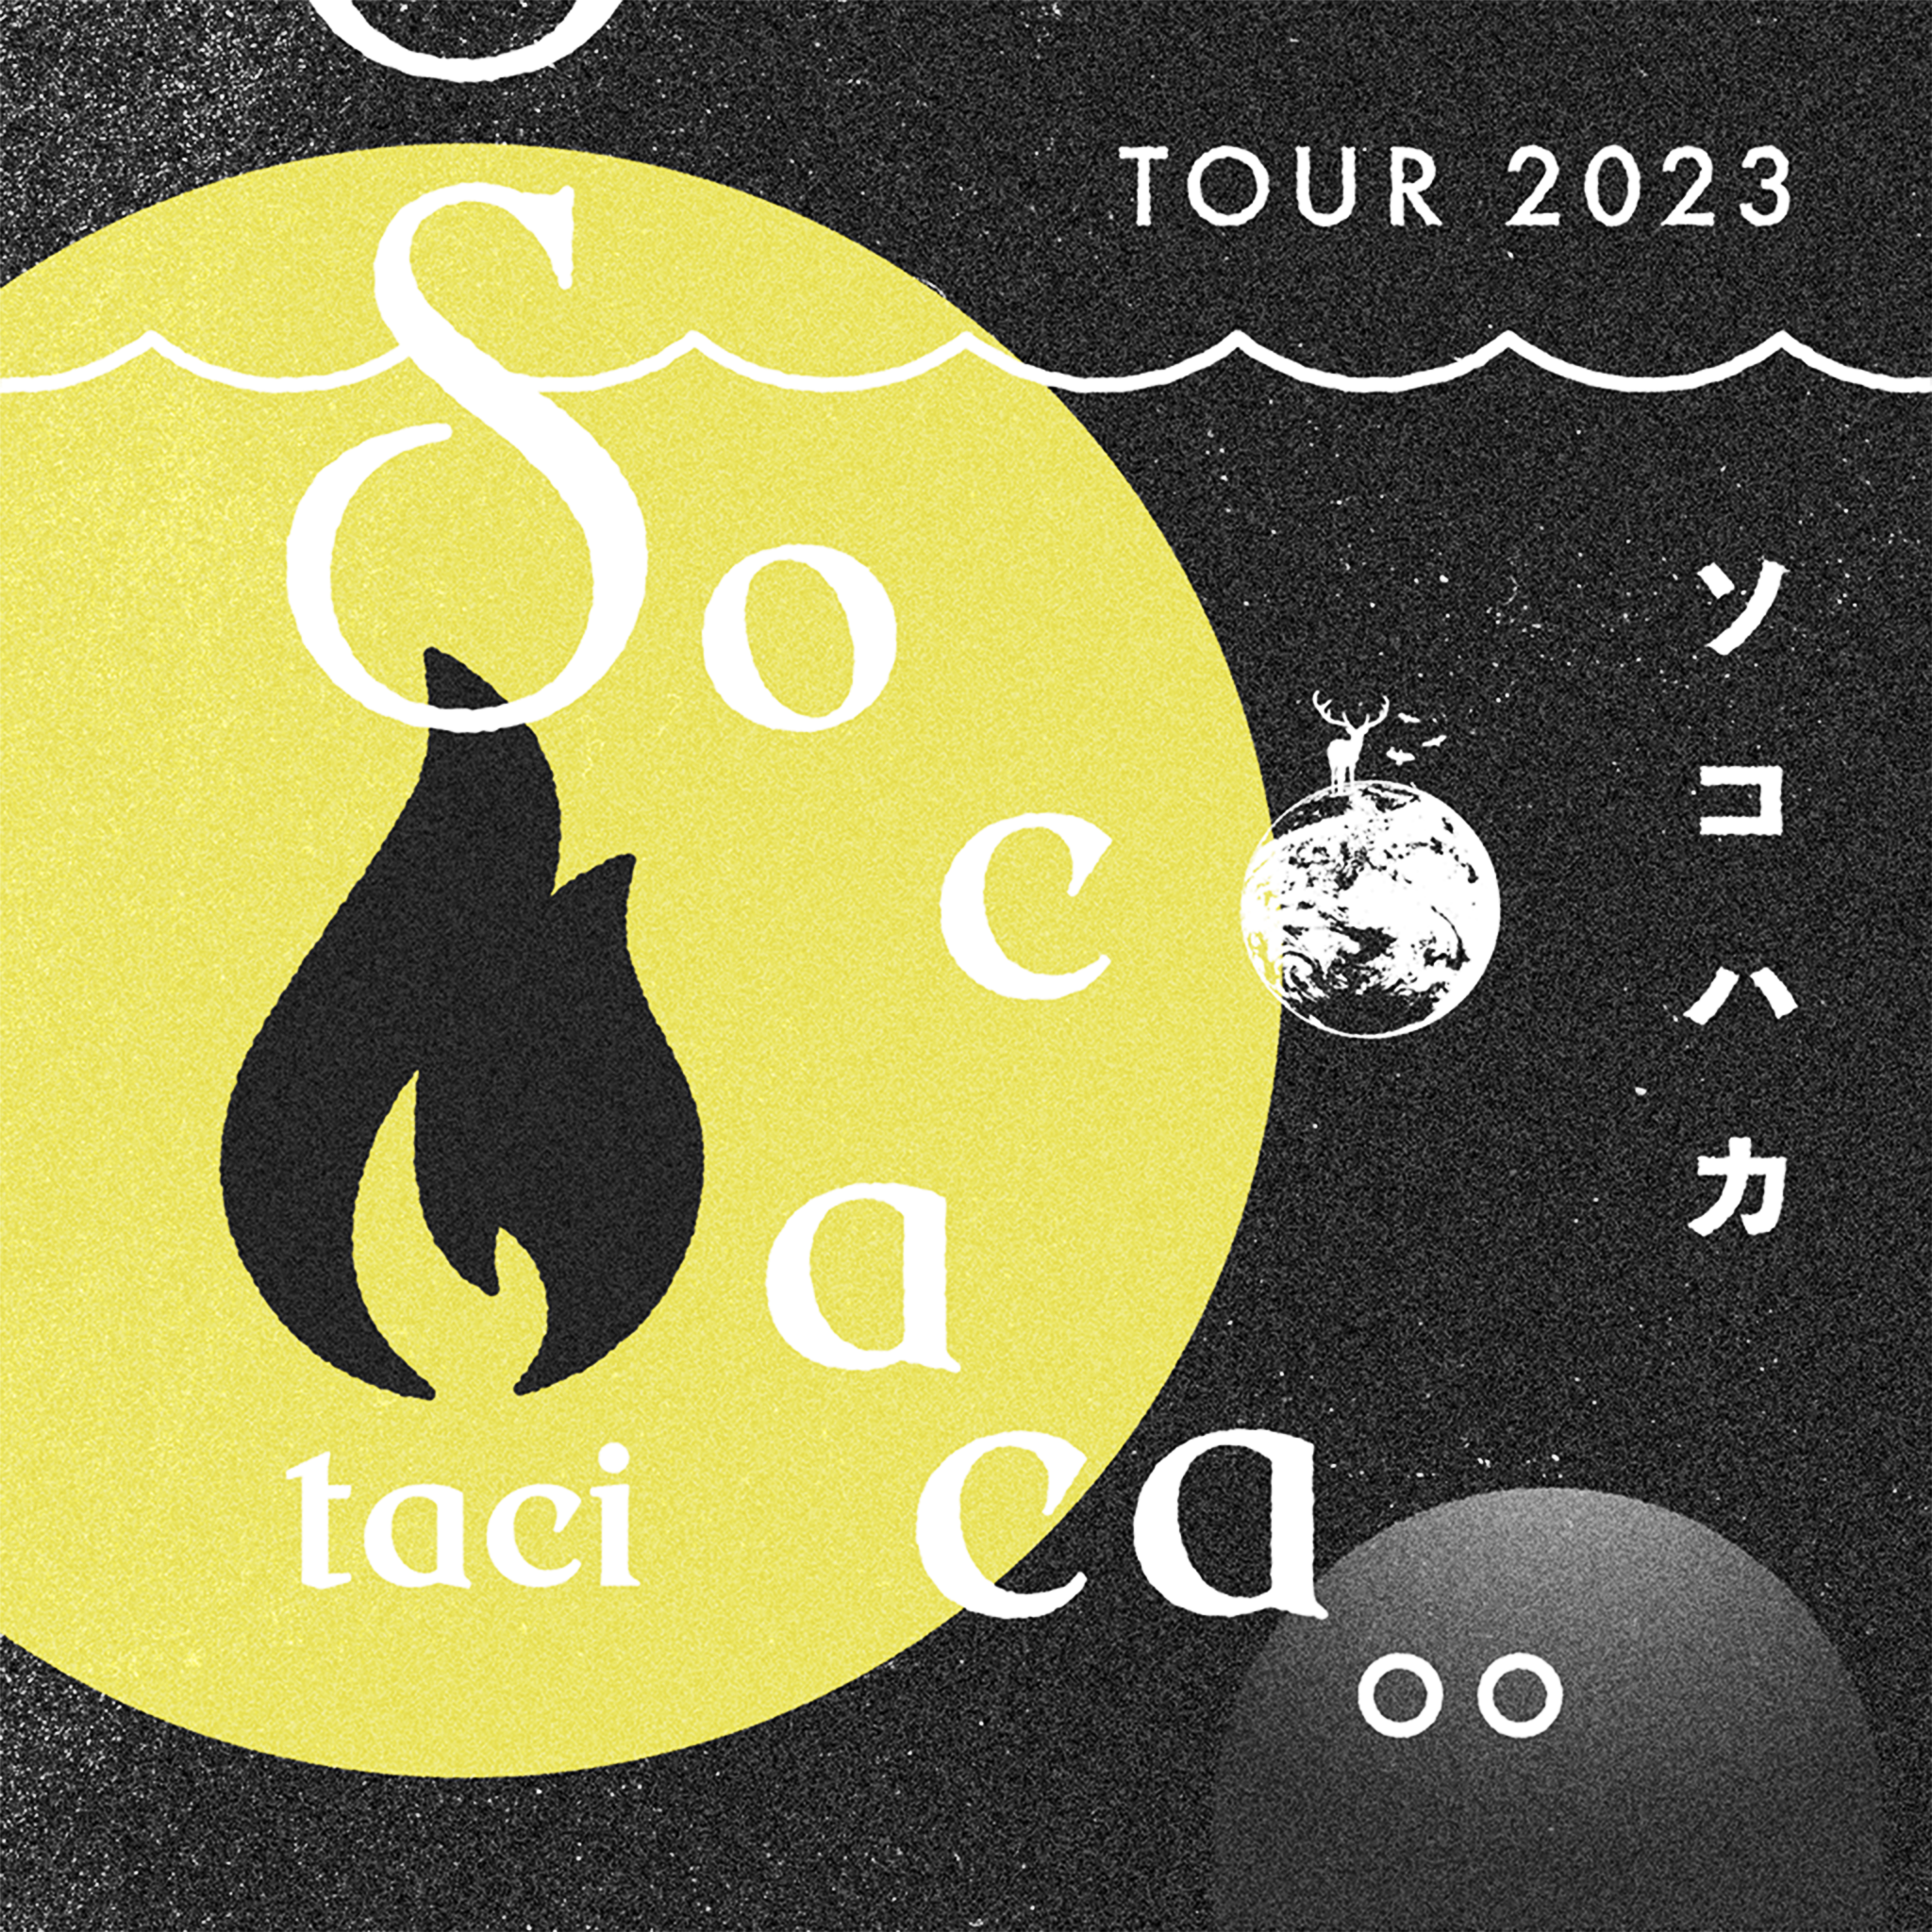 tacica tour 2023 “socohaca”